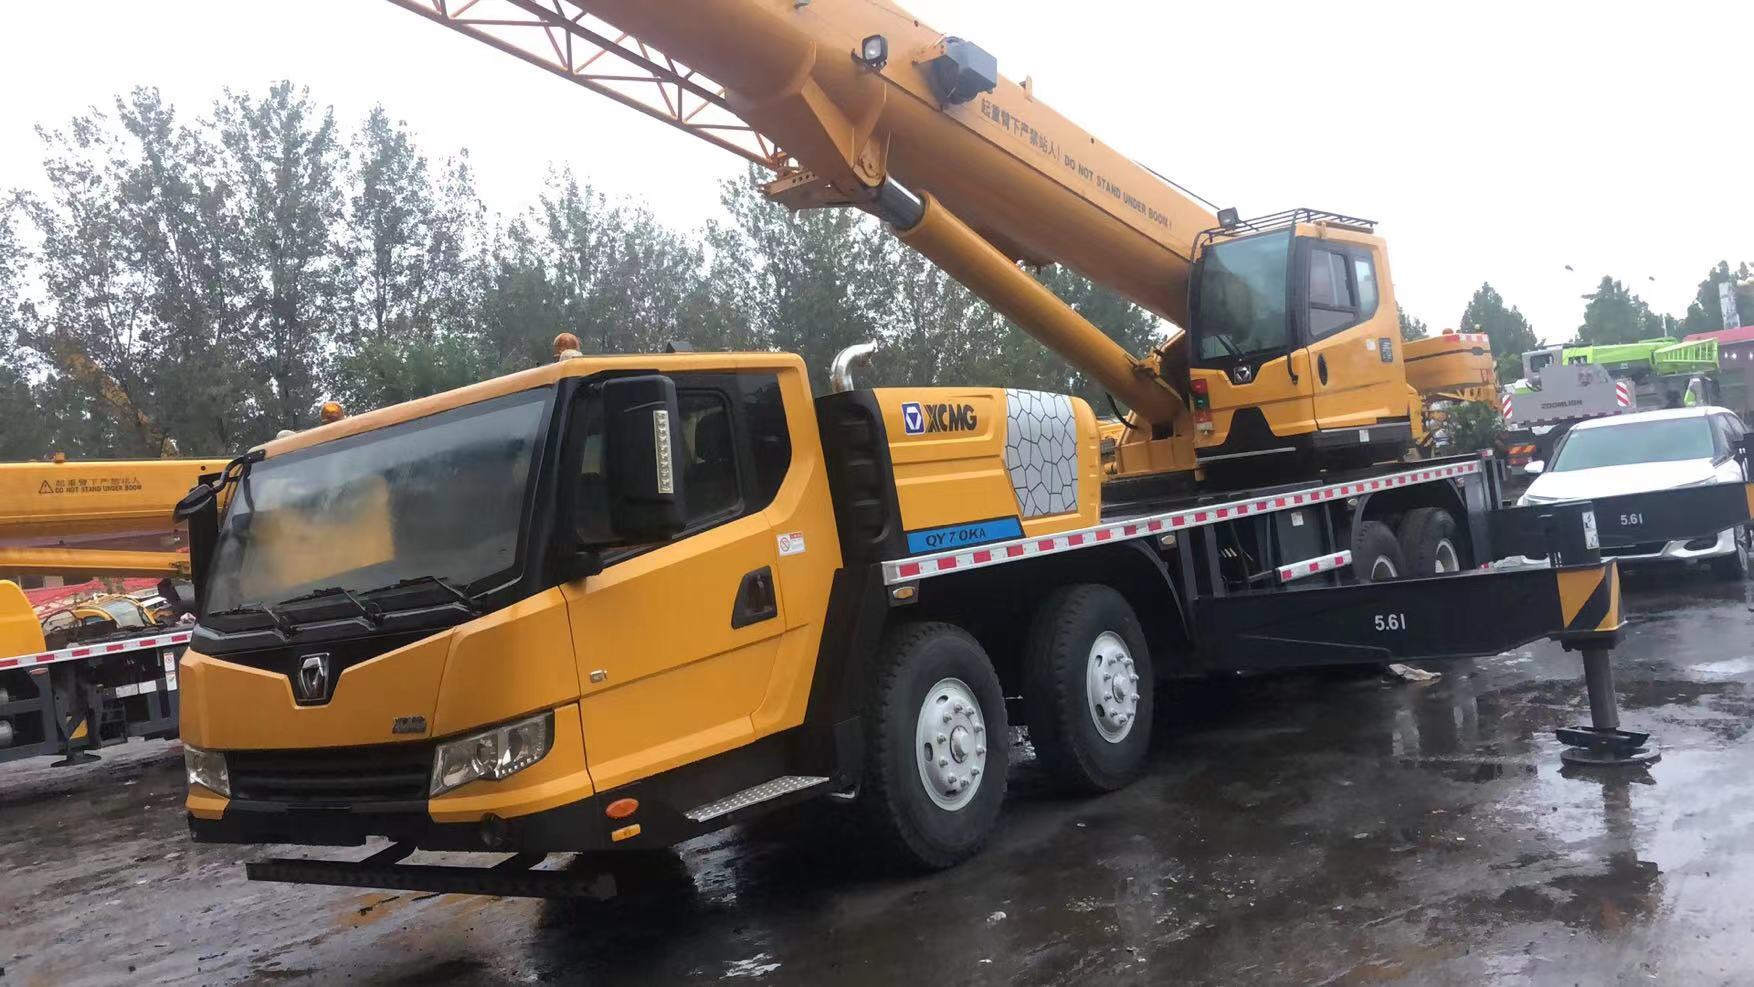 Grúas sobre camión usadas XCMG QY70K con capacidad de elevación de 70 toneladas para levantar varios proyectos a gran escala 10